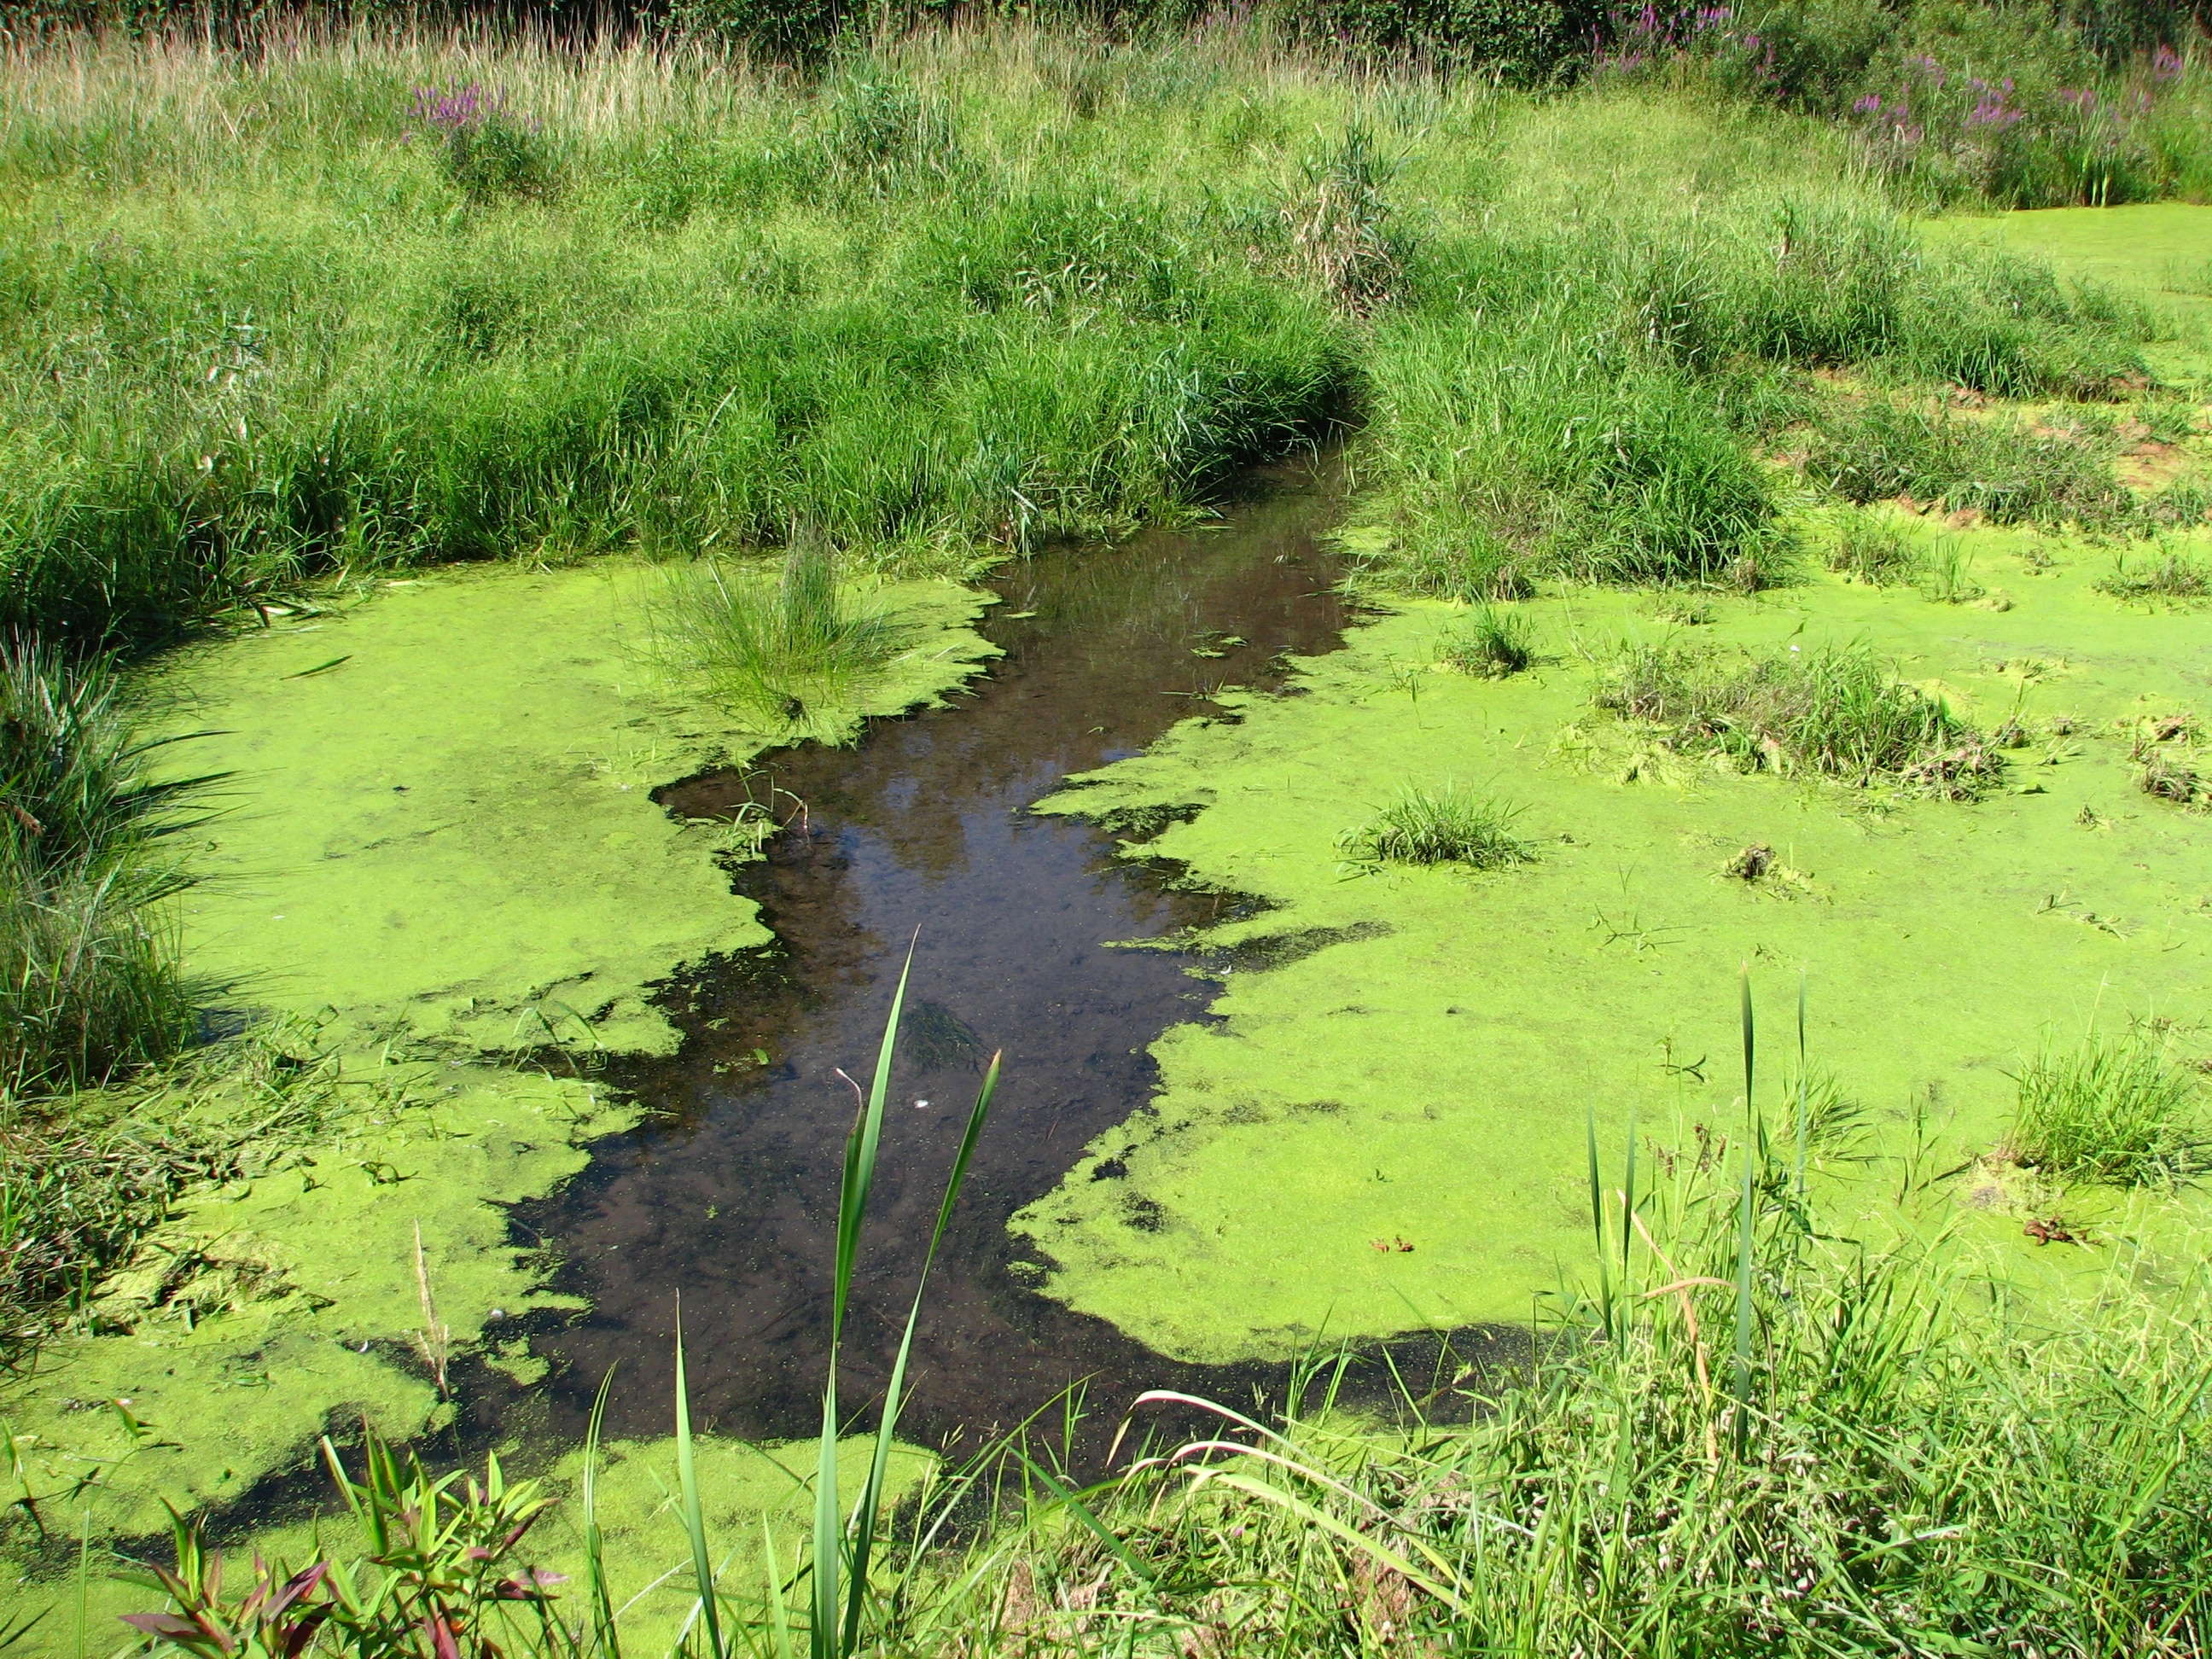 small pond with blue-green algae present.